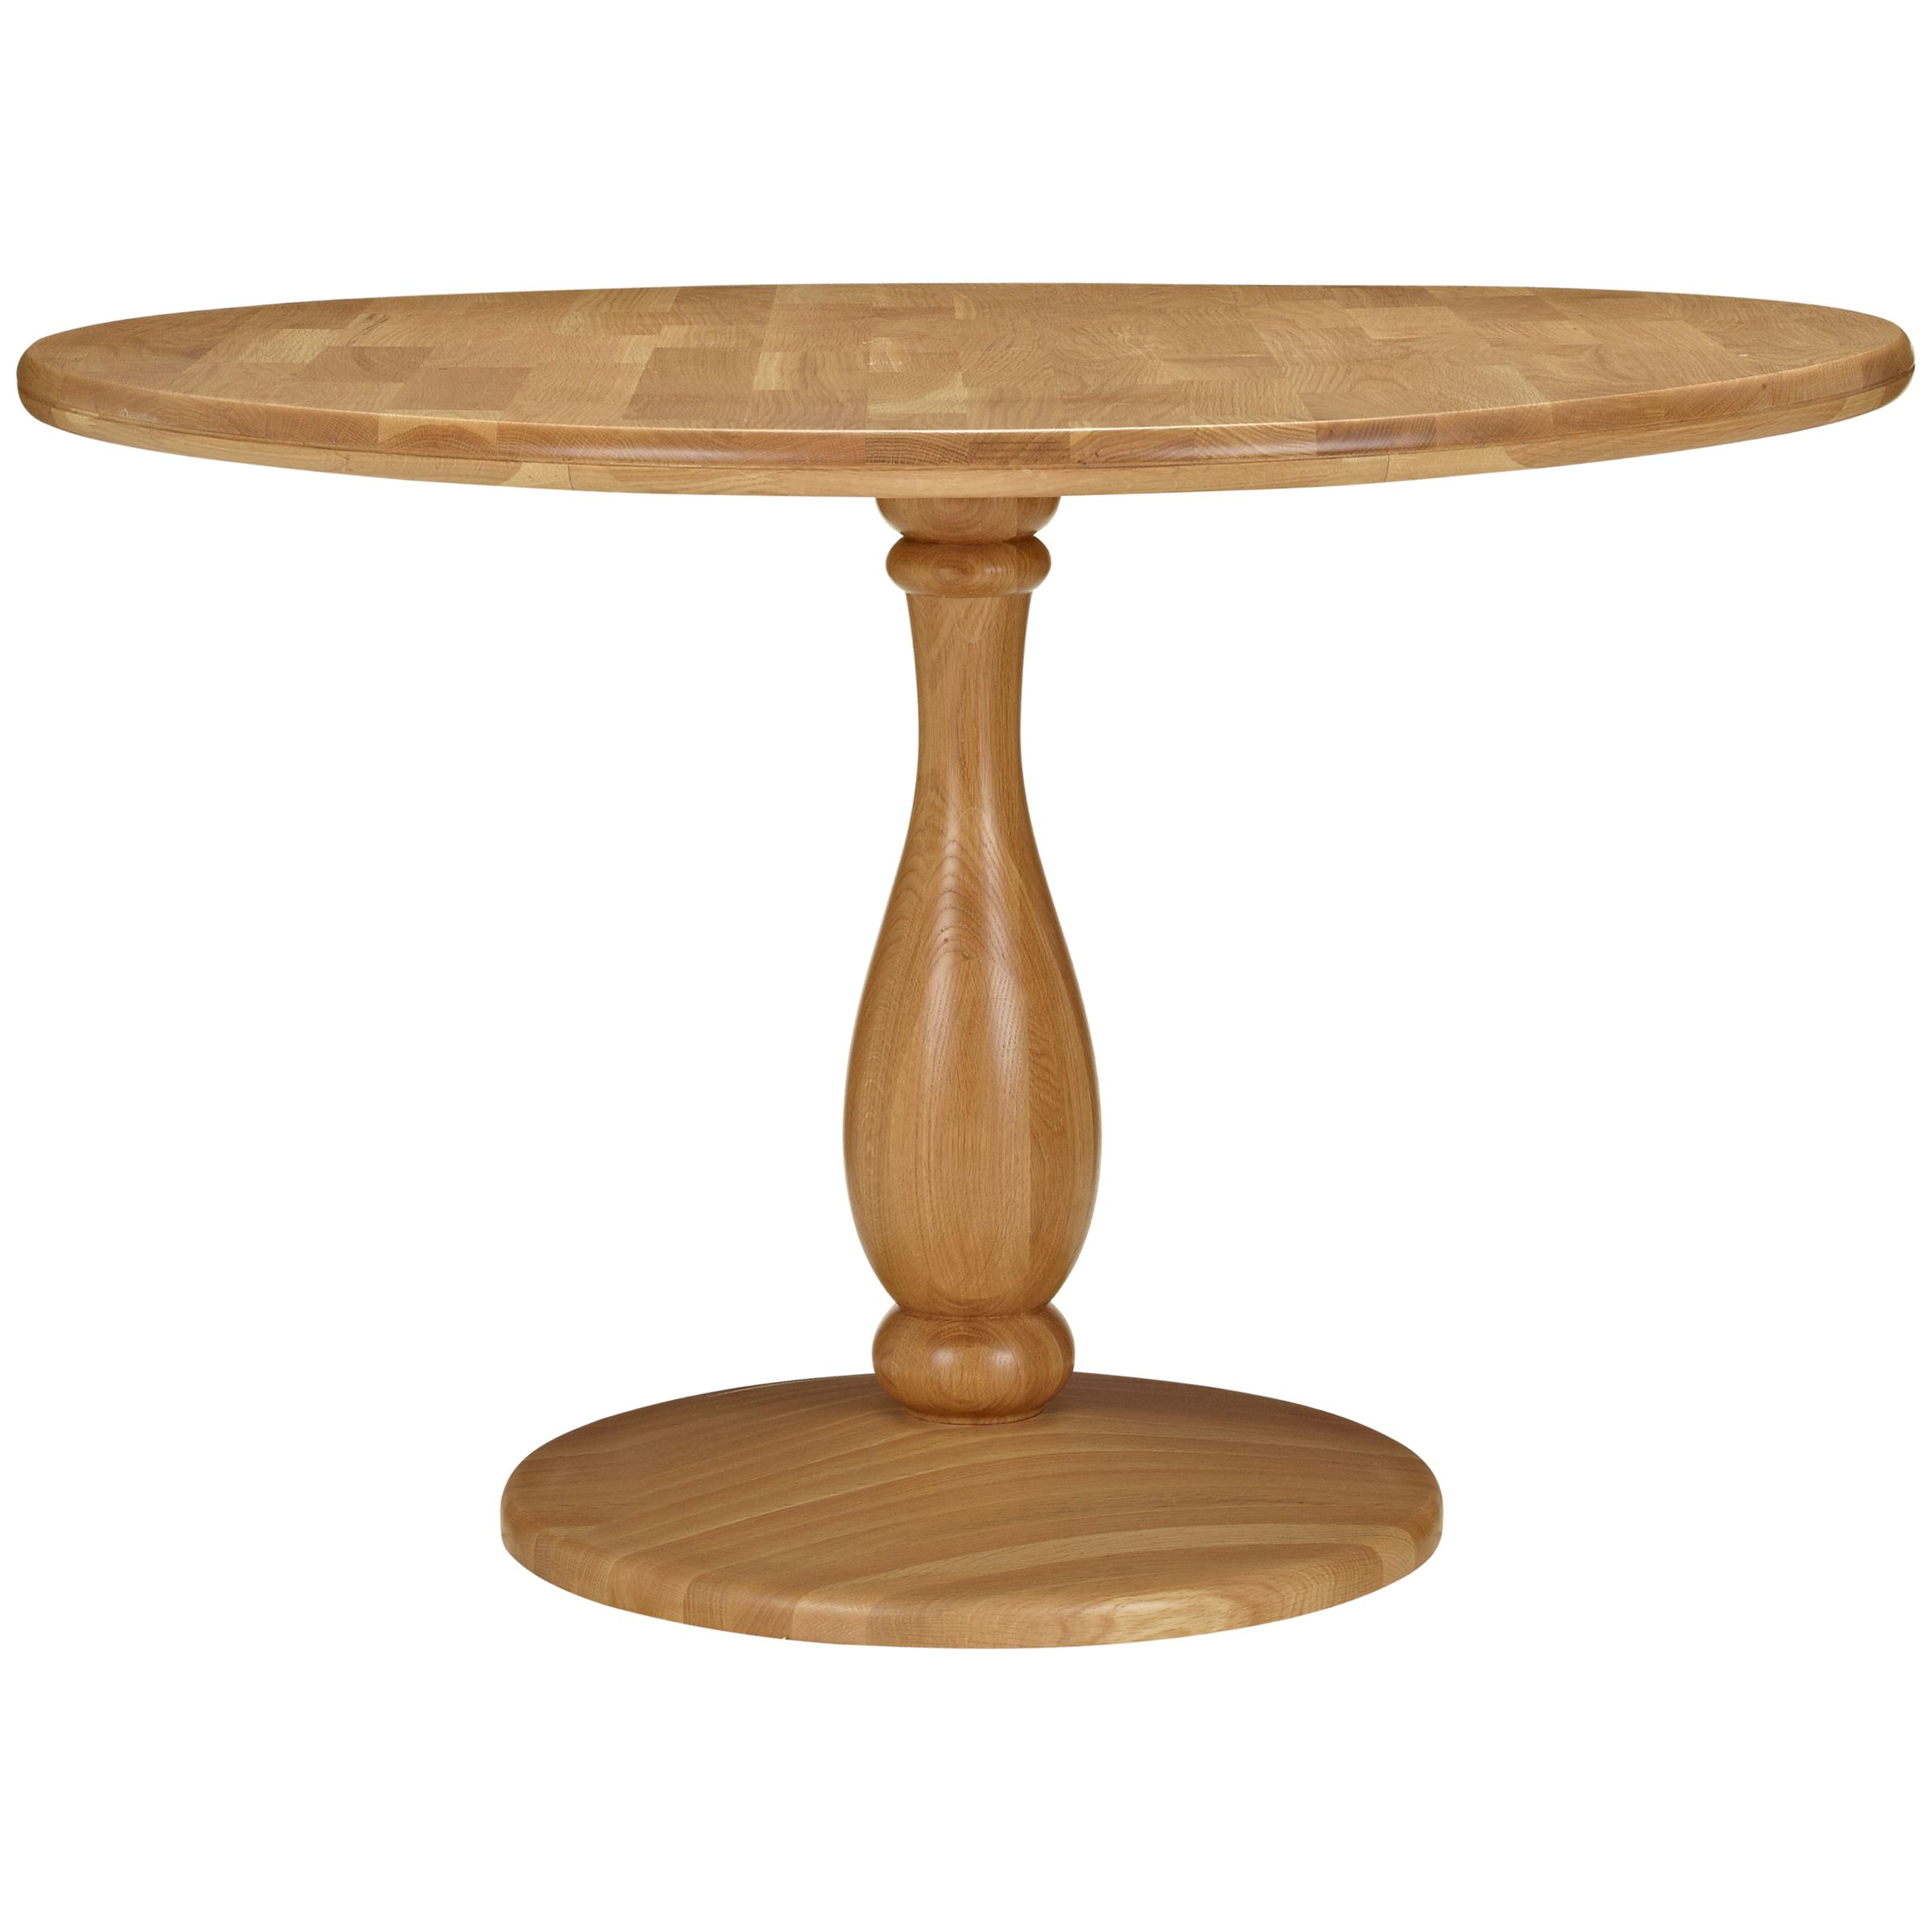 John Lewis Burbank 4 Seater Round Dining Table, width 120cm